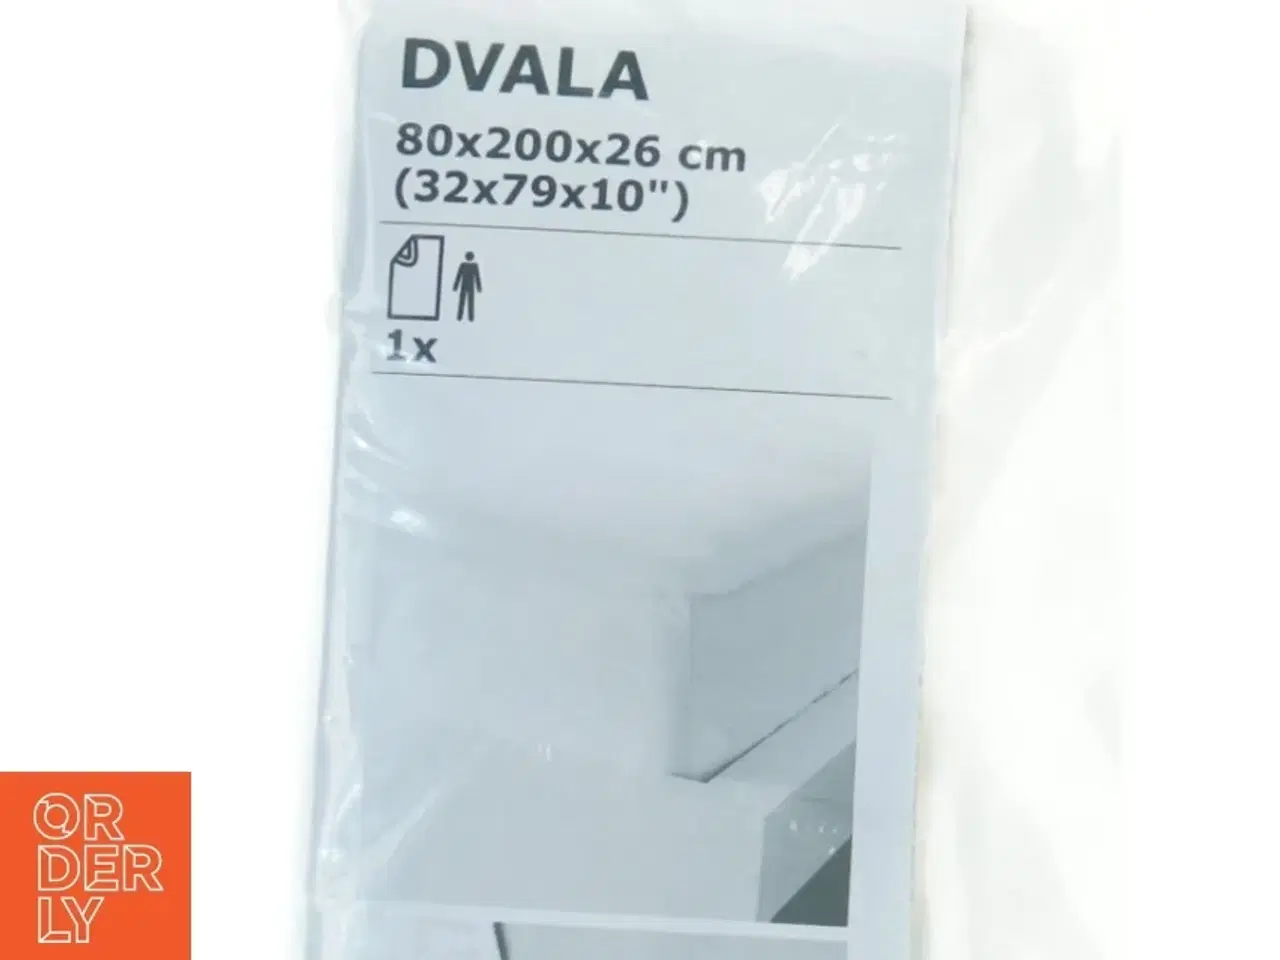 Billede 1 - IKEA DVALA Lagen, hvid fra IKEA (str. 80 x 200 x 26 cm)